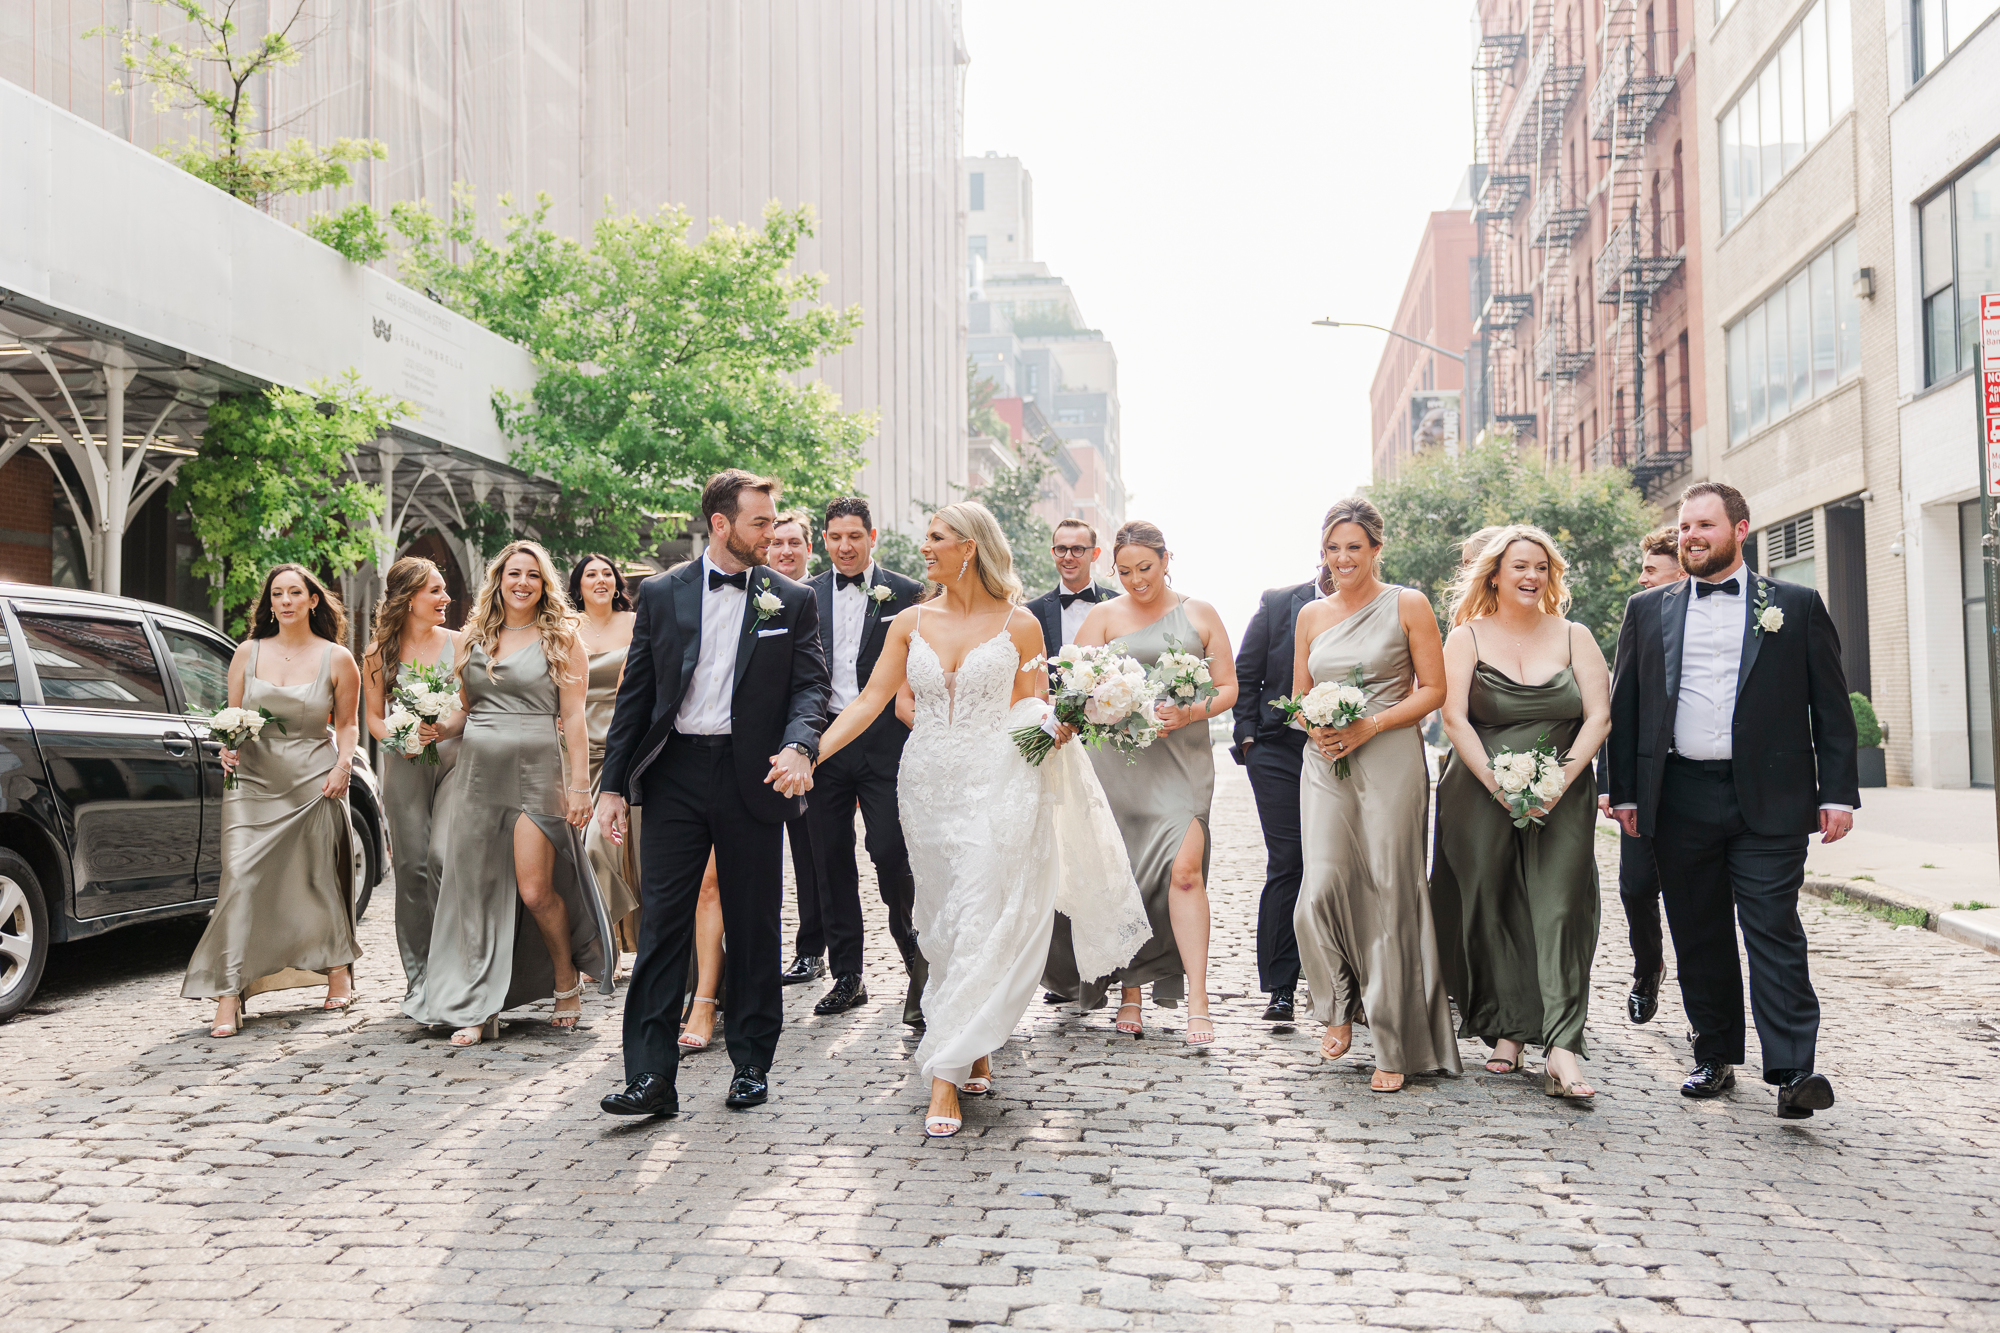 Fun Photo Gallery of Tribeca Rooftop Wedding